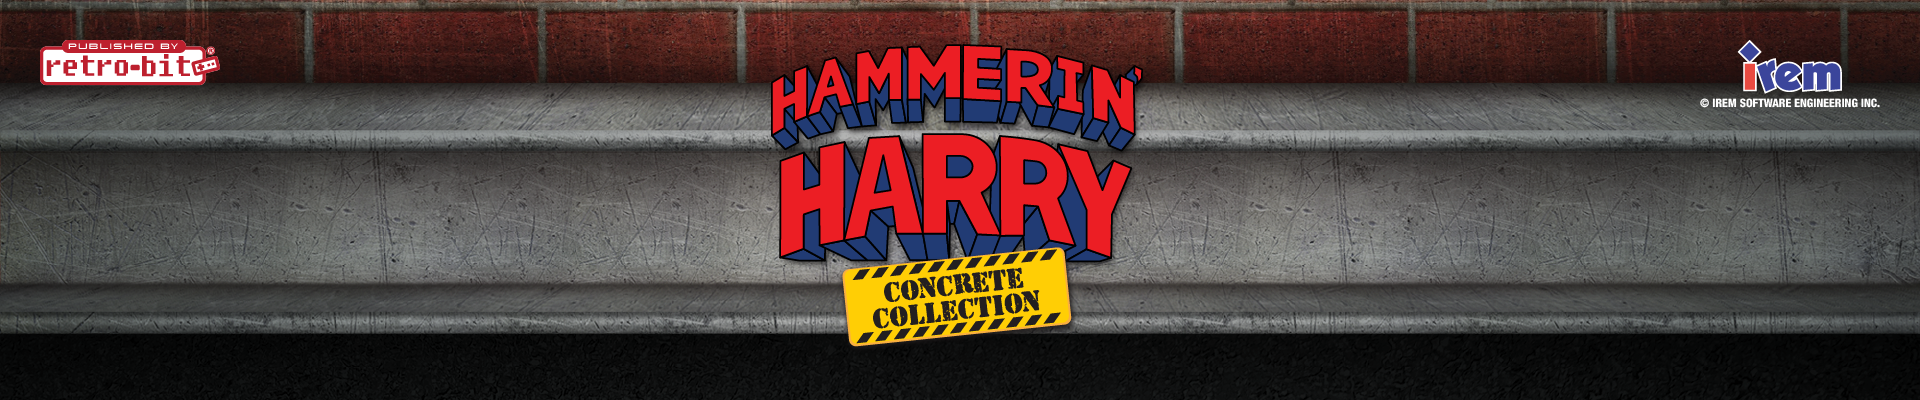 Hammerin' Harry Concrete Collection - Irem - Retro-Bit Publishing